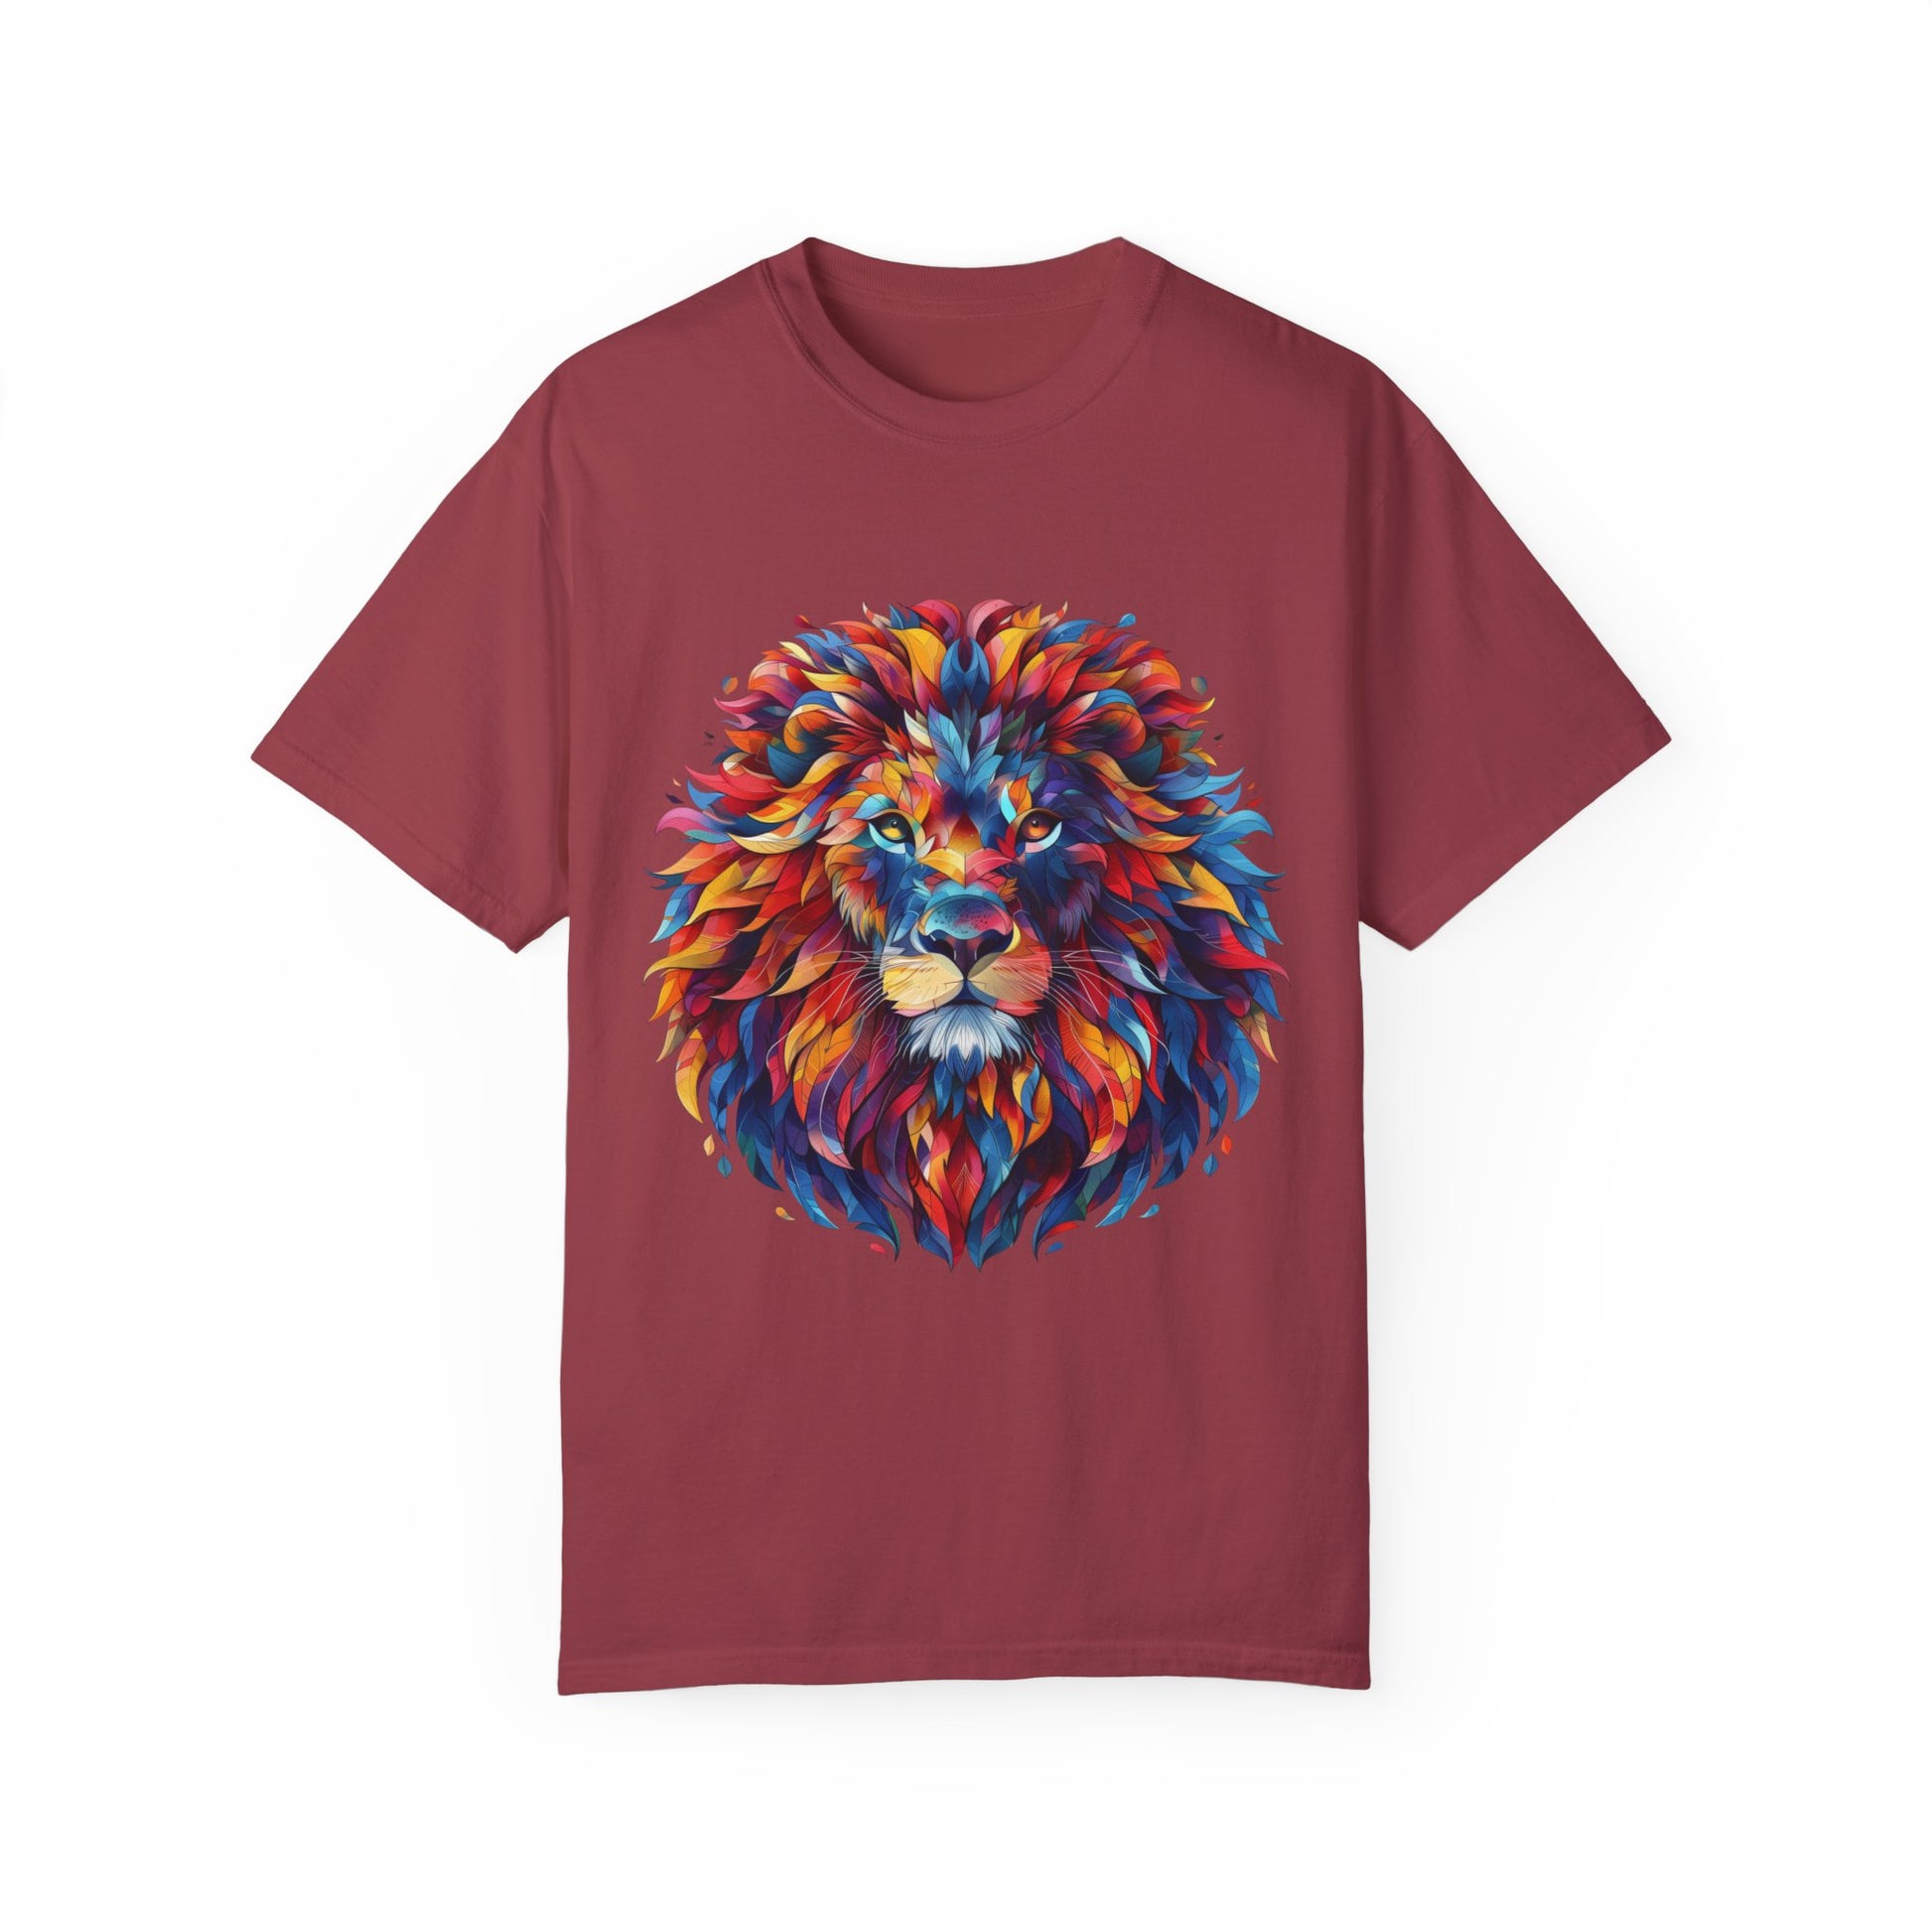 Lion Head Cool Graphic Design Novelty Unisex Garment-dyed T-shirt Cotton Funny Humorous Graphic Soft Premium Unisex Men Women Chili T-shirt Birthday Gift-7